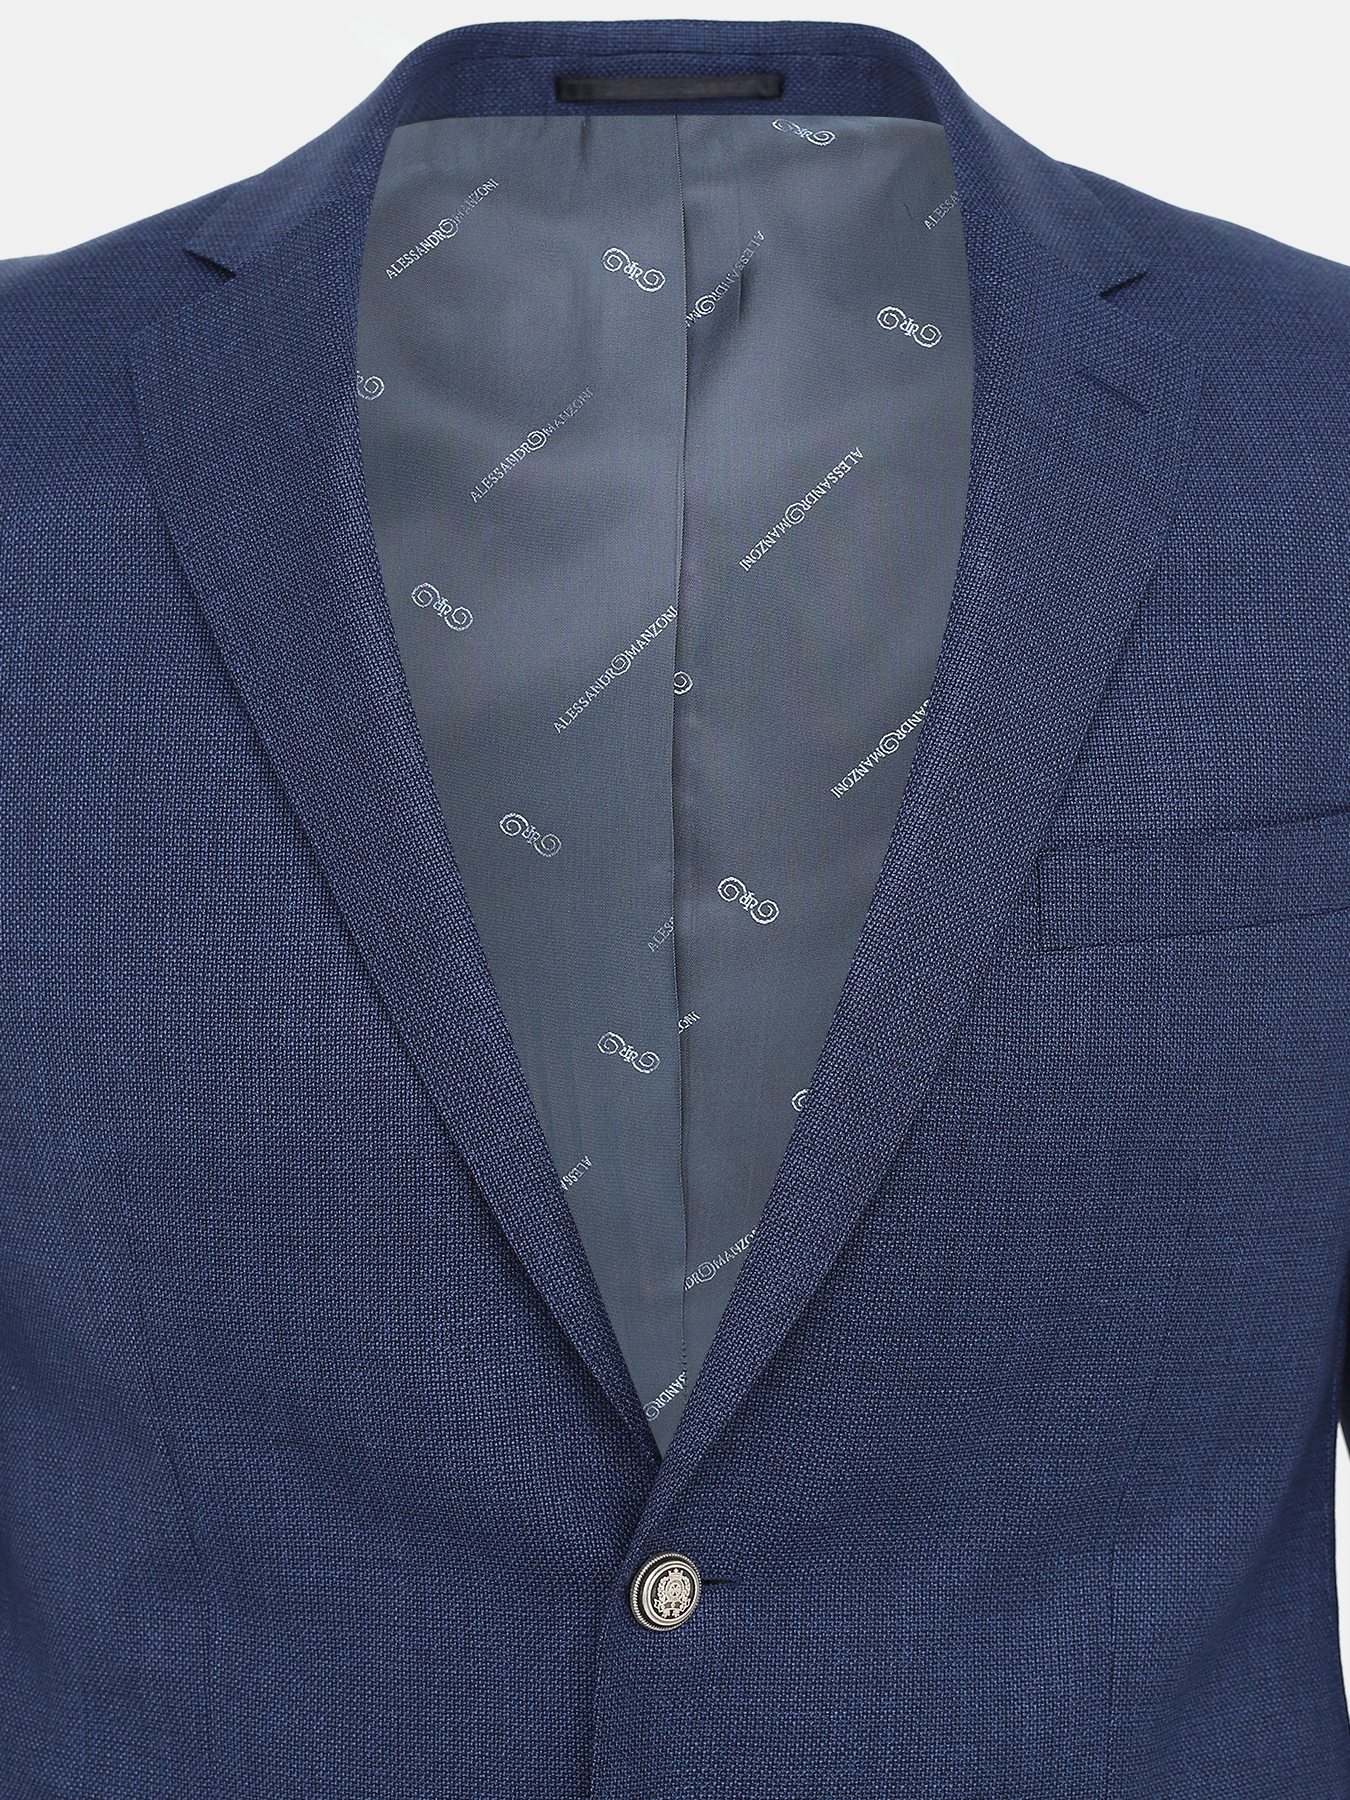 Пиджак Alessandro Manzoni 396180-382, цвет синий, размер 46 - фото 5